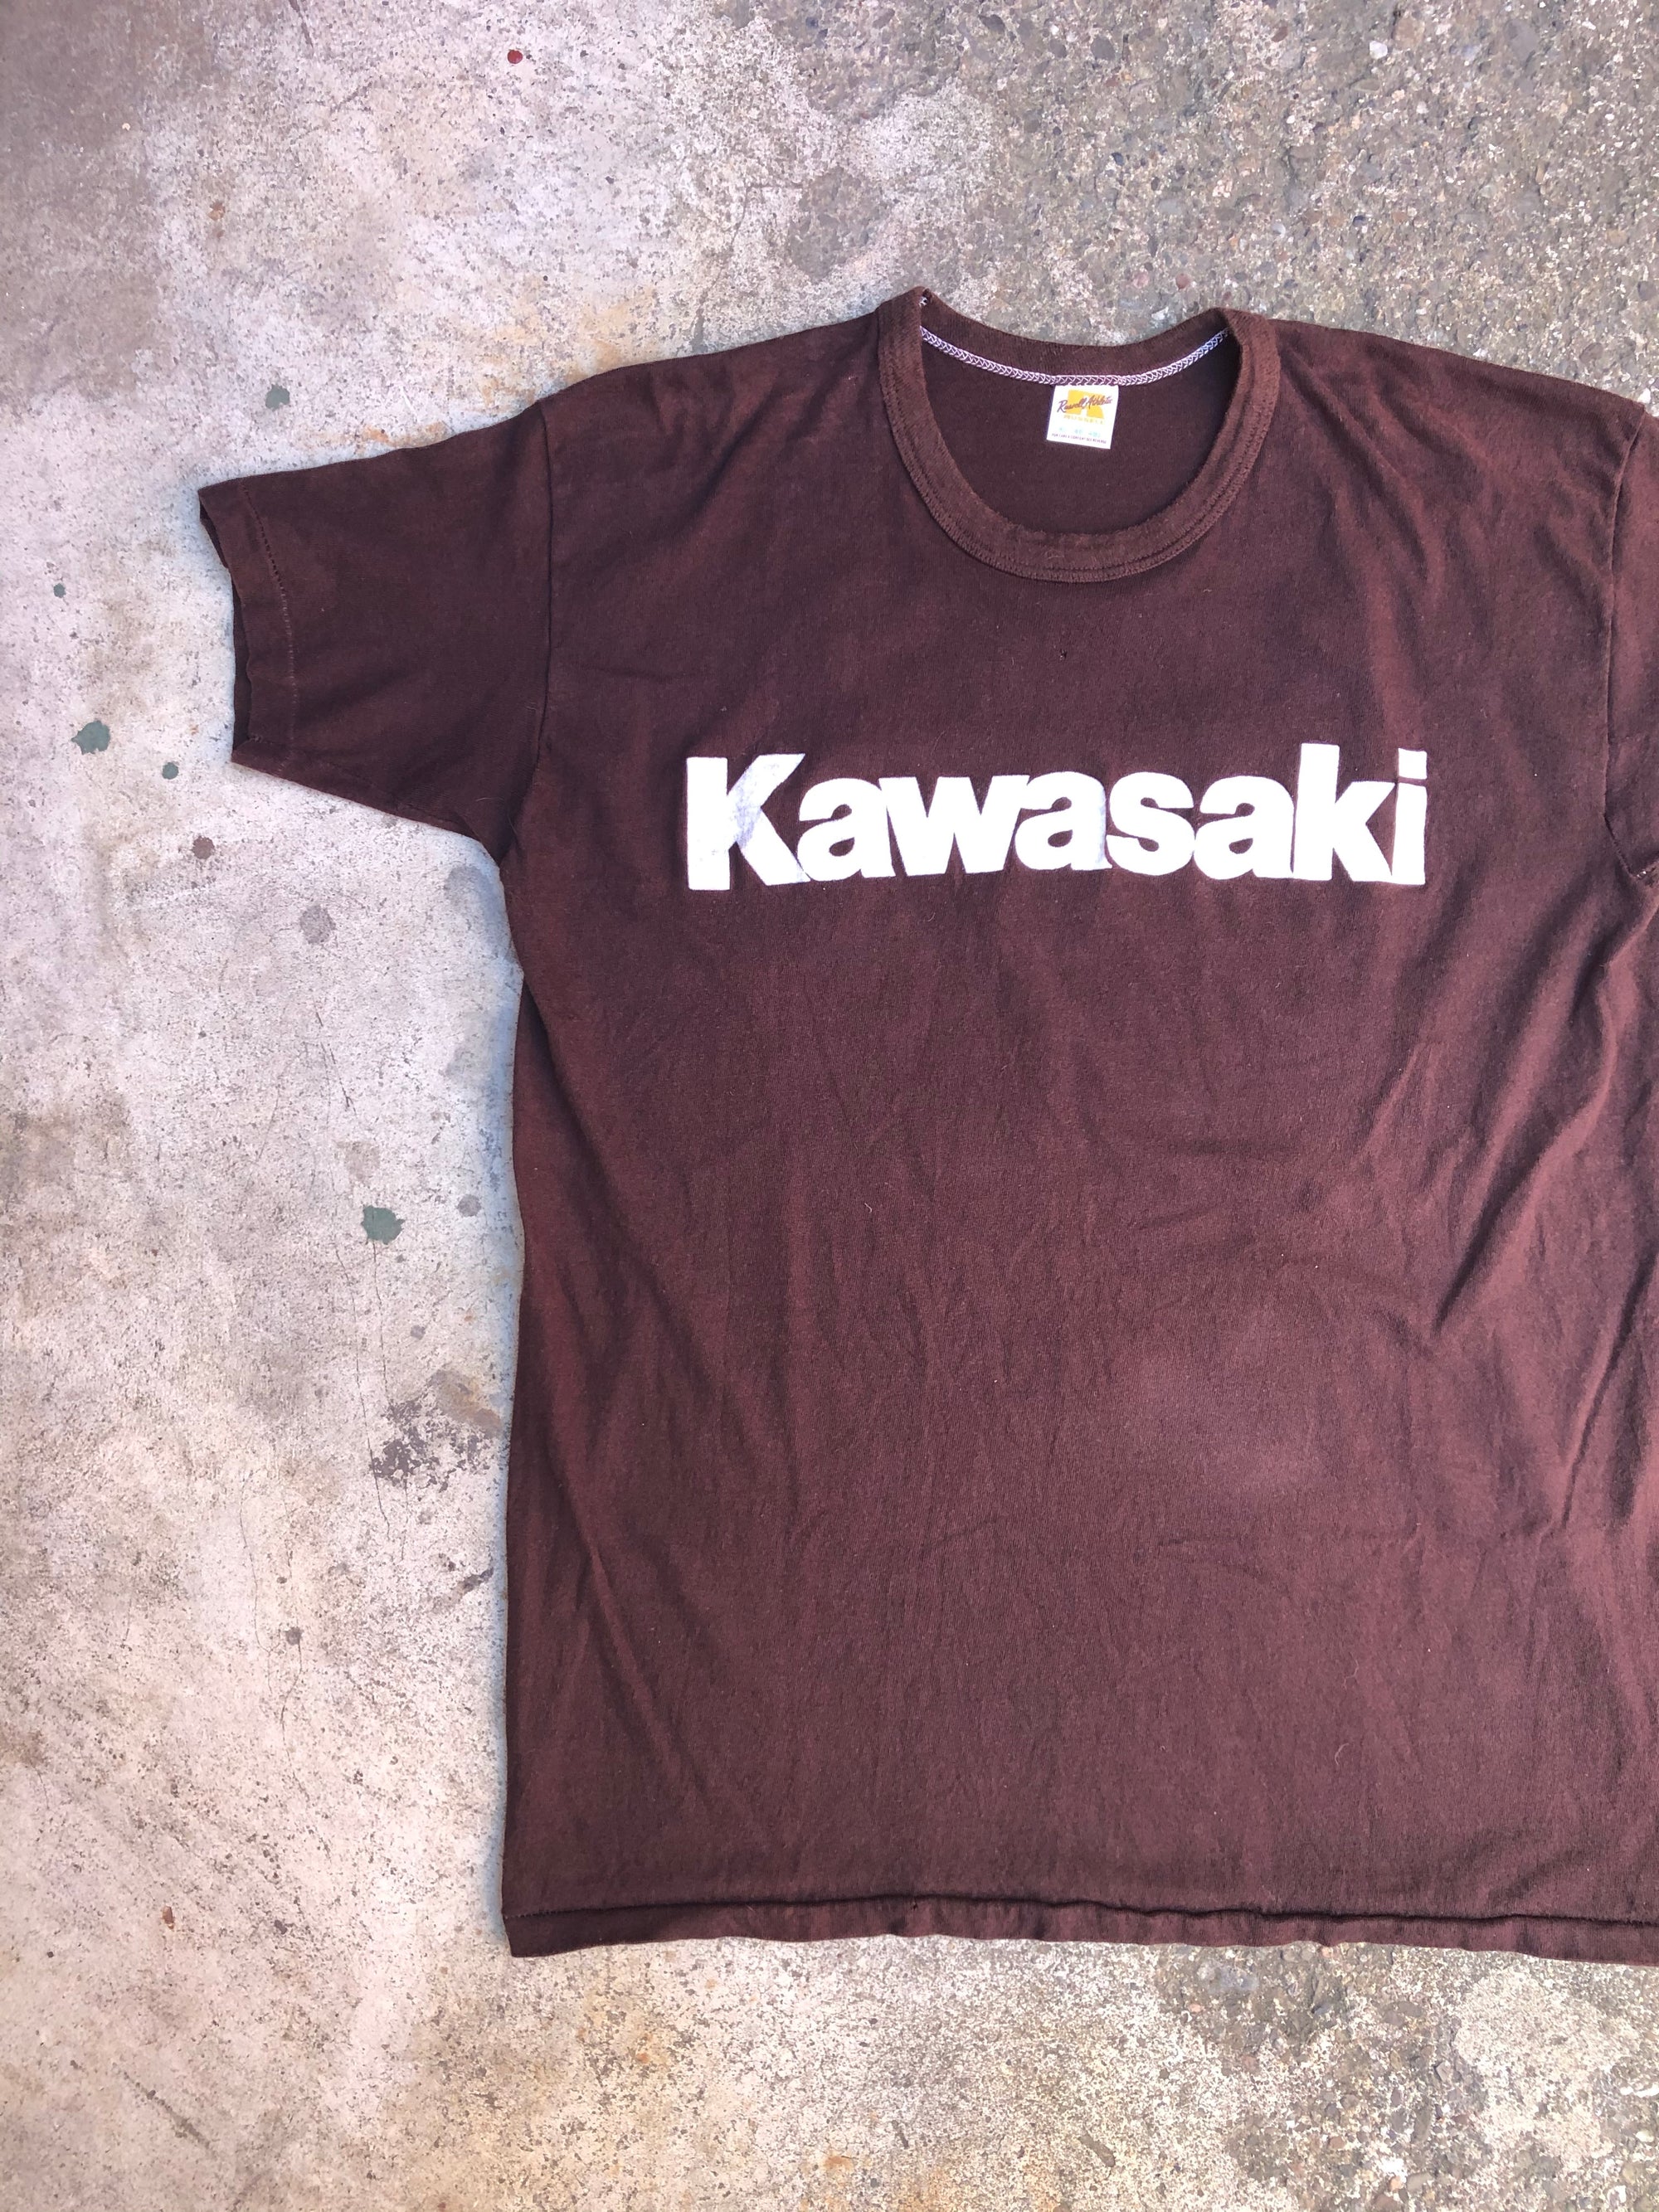 1970s Russell Brown “Kawasaki” Tee